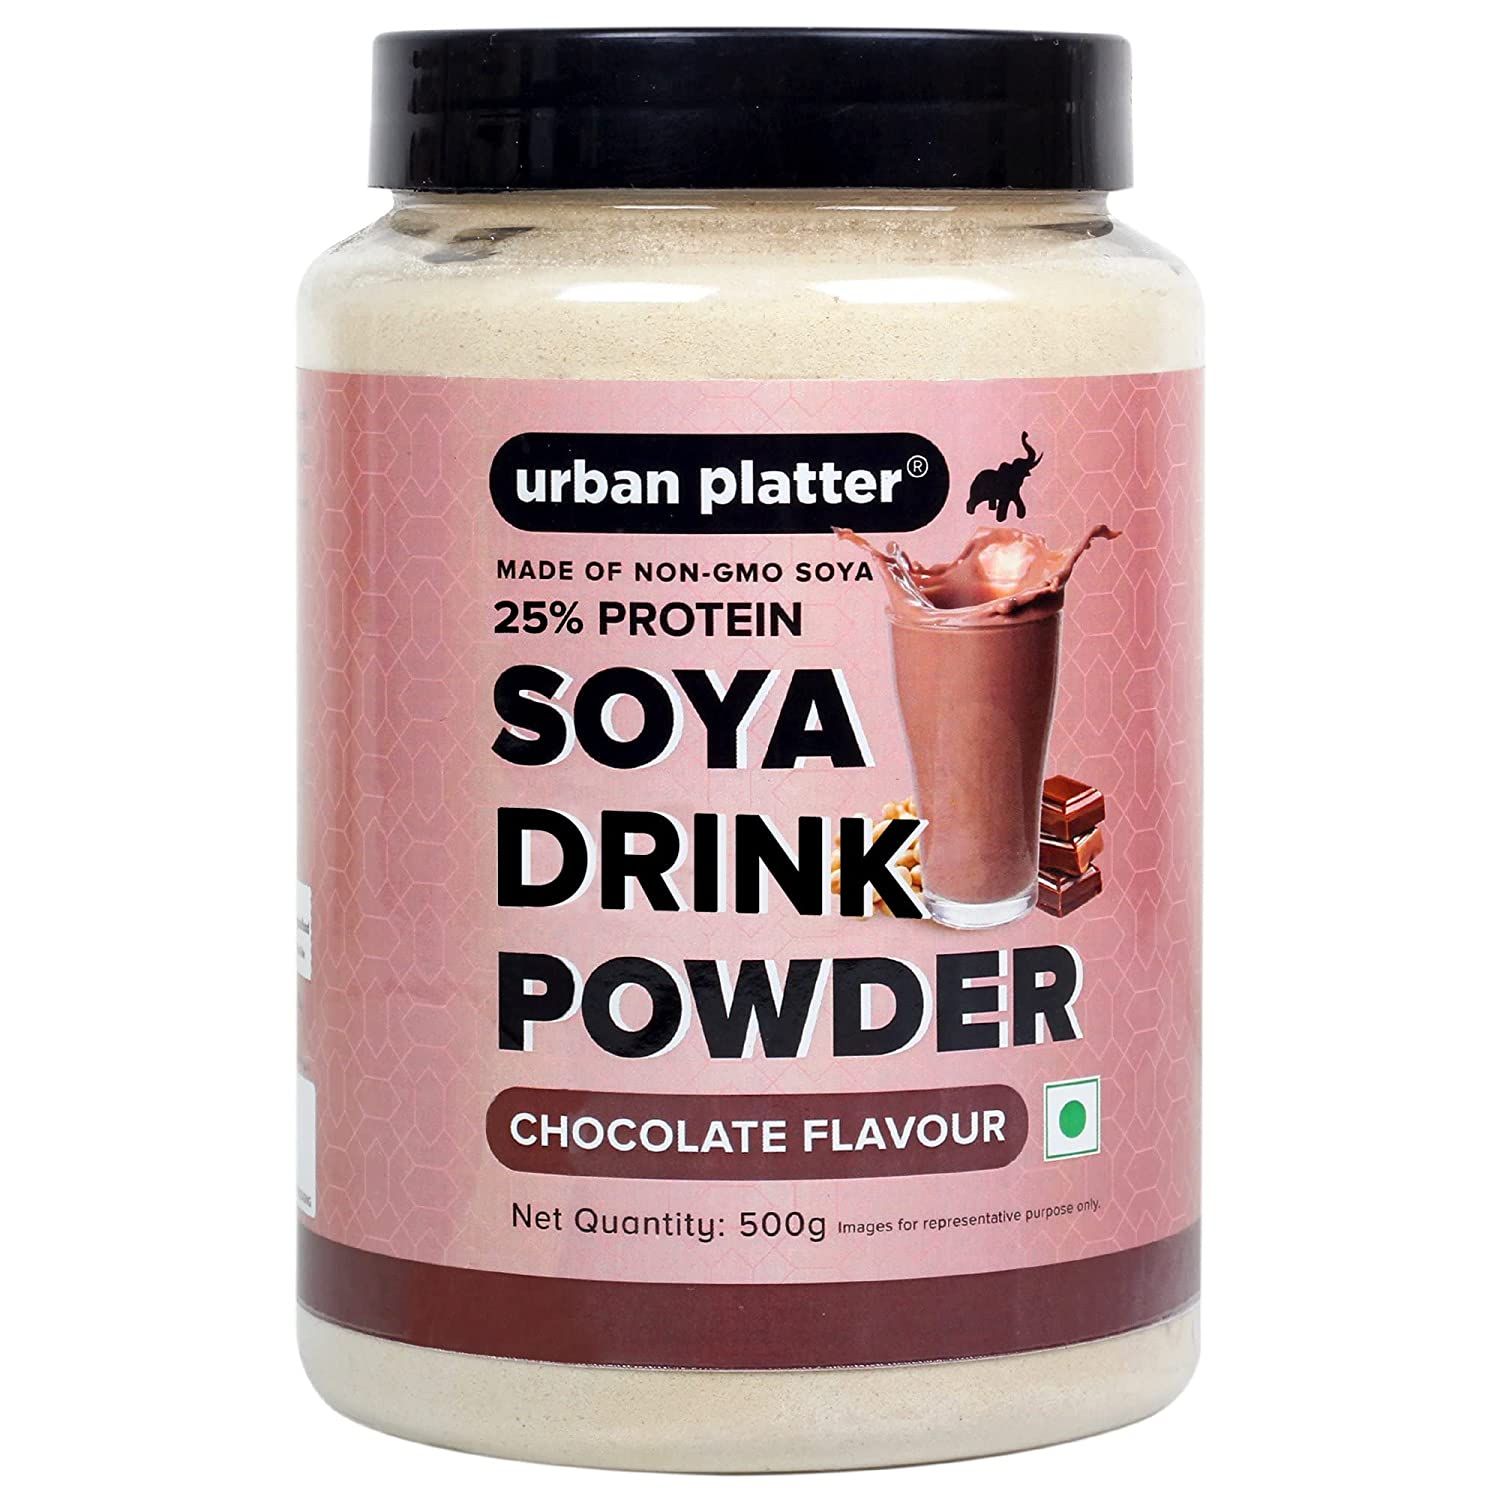 Urban Platter Soya Drink Powder Chocolate flavour Image